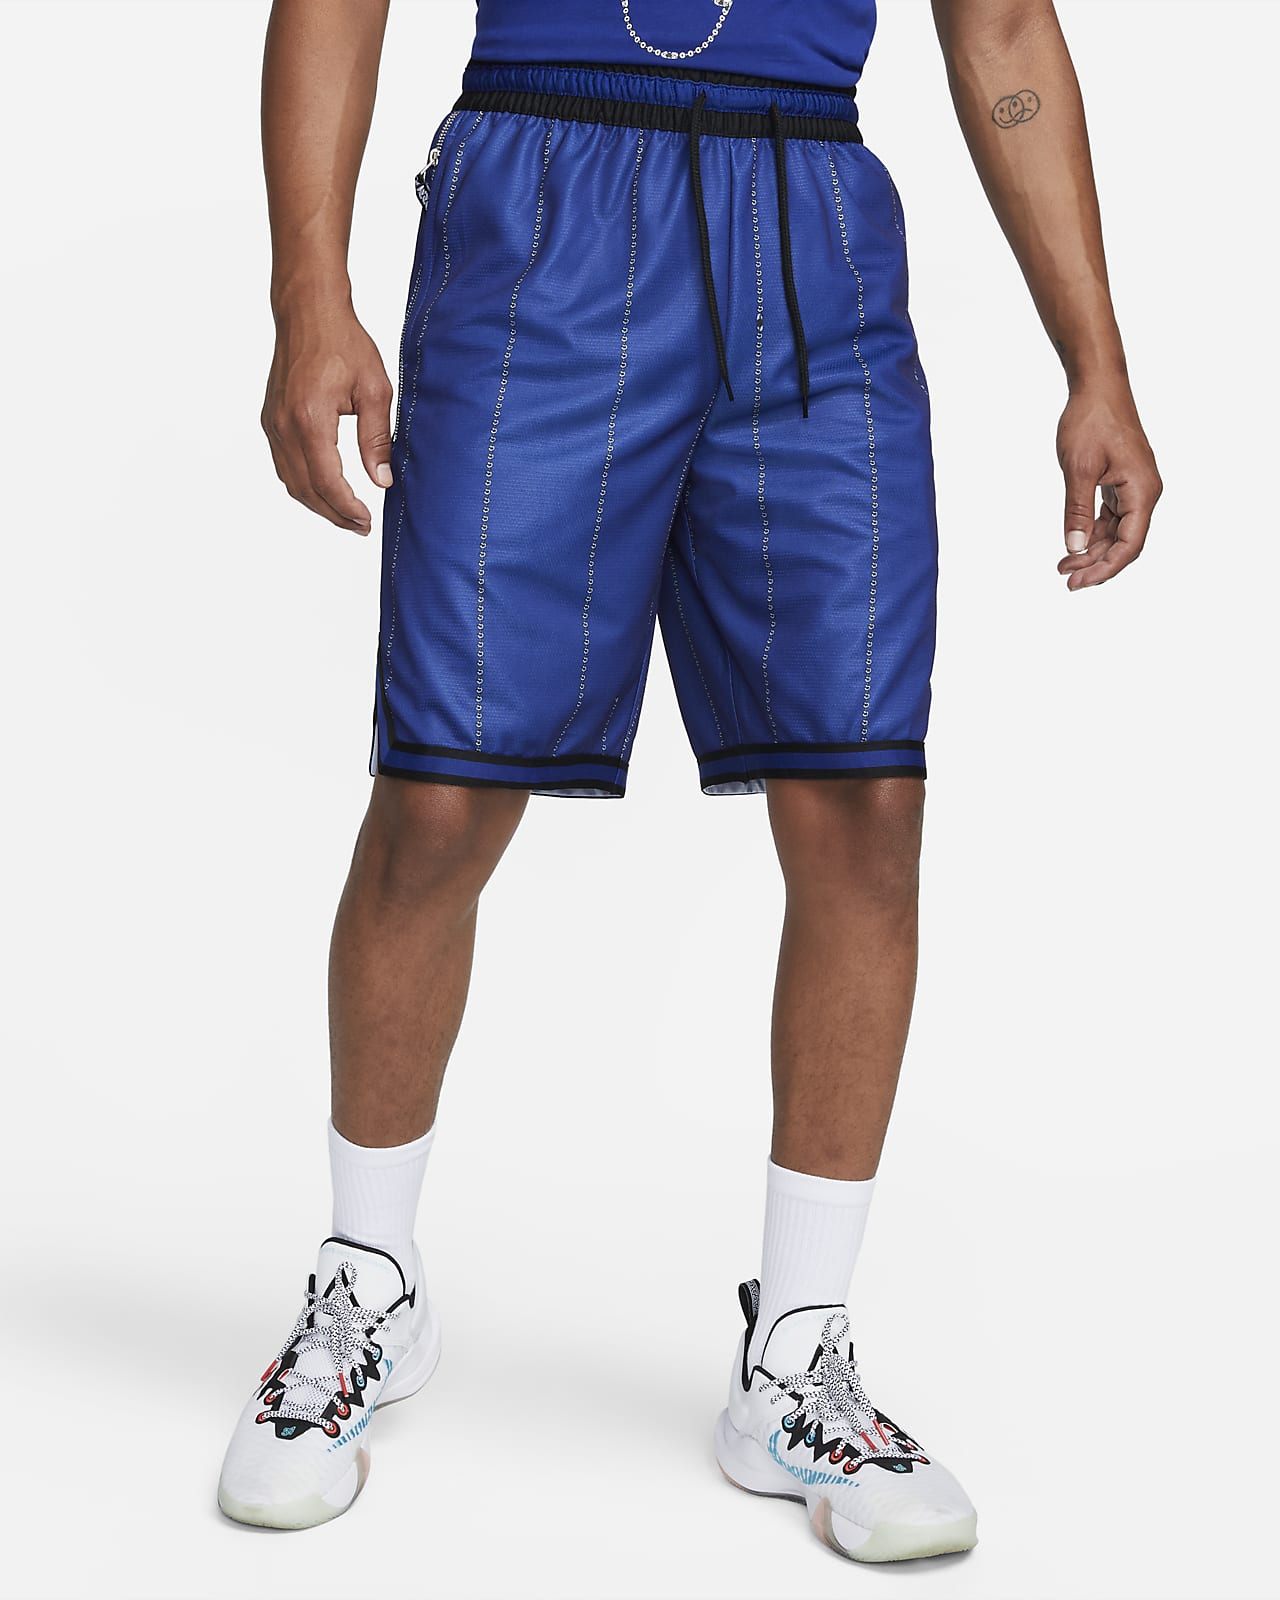 Nike Dri-FIT DNA Men's 10" (25cm approx.) Basketball Shorts